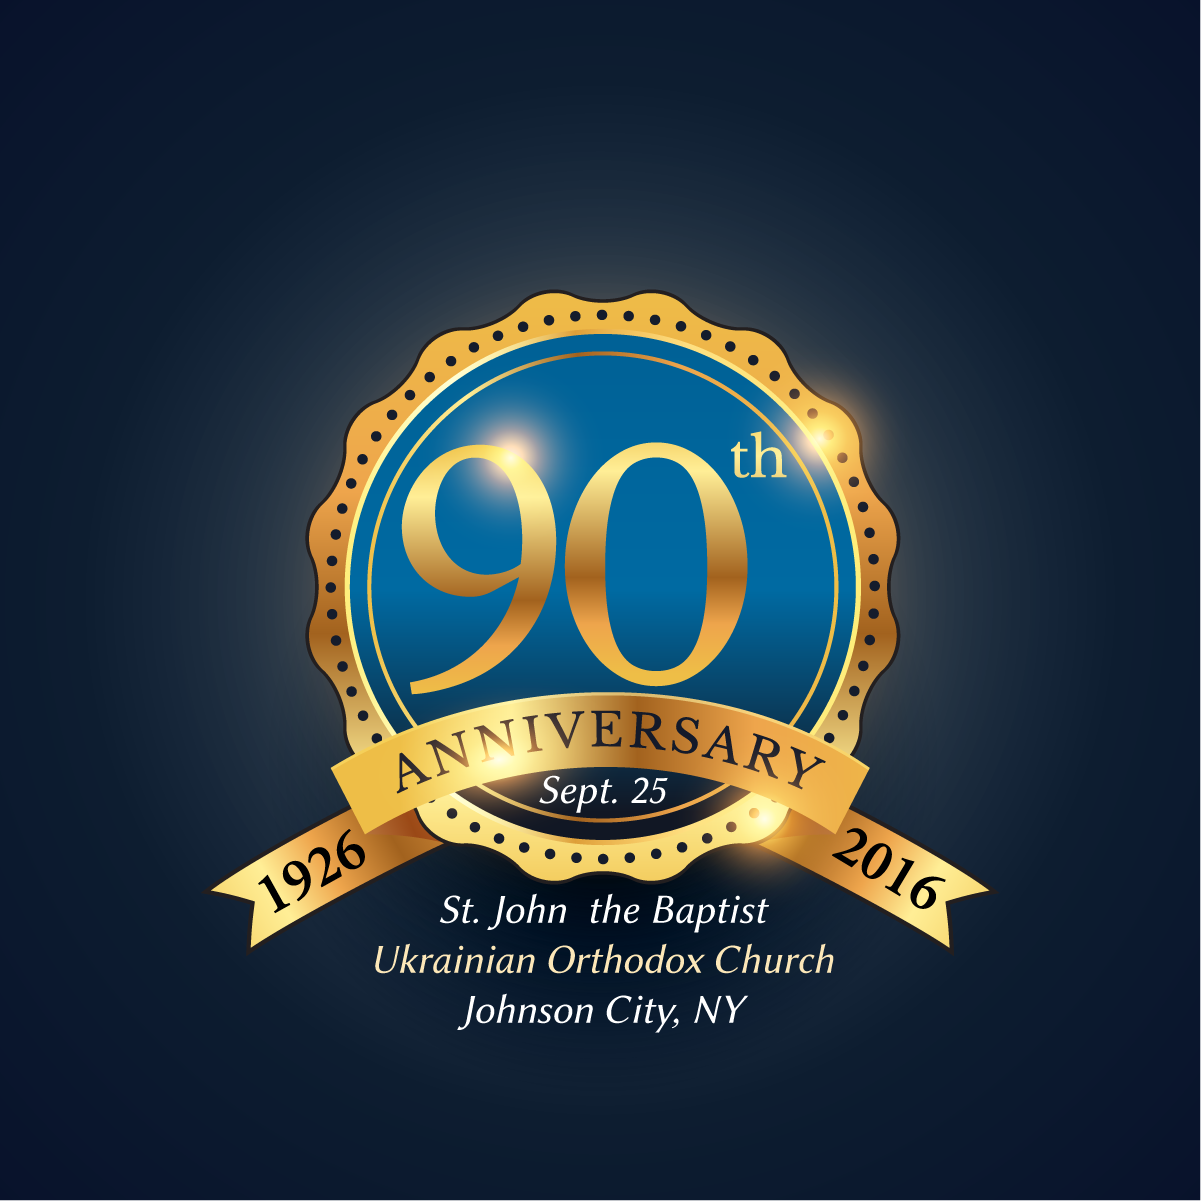 90th Anniversary - Sept. 25